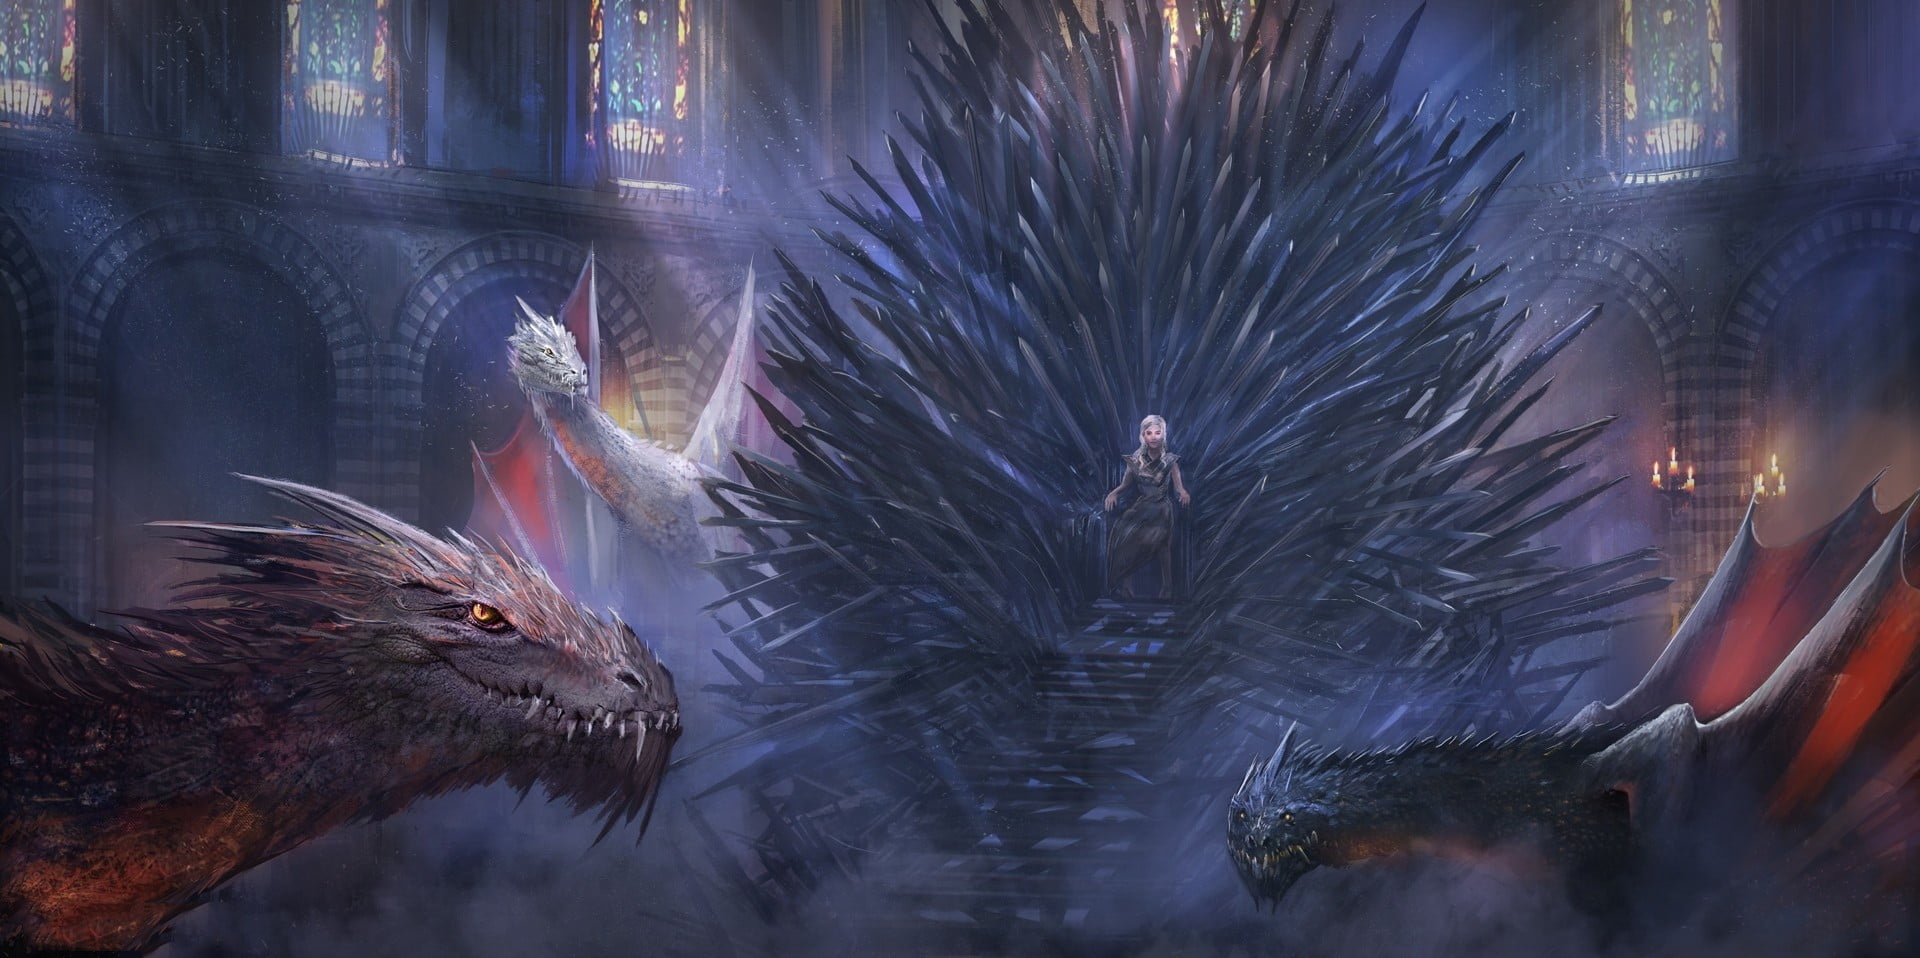 black dragon illustration, fantasy art, Game of Thrones, Daenerys Targaryen